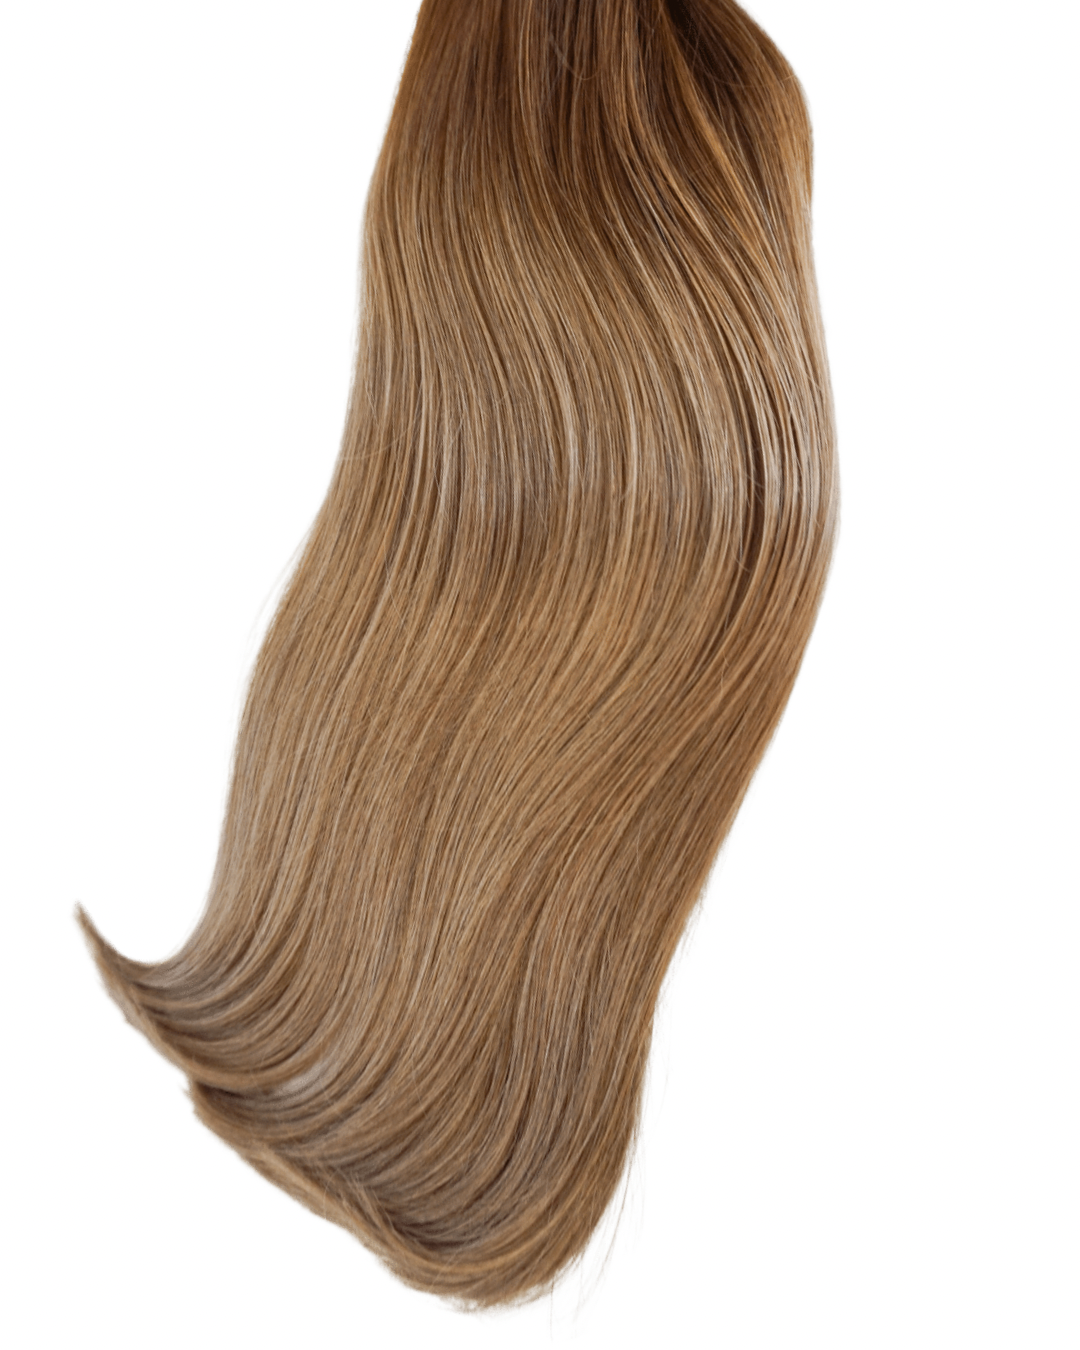 Caramello Haze Balayage Clip In Hair Extensions - Kiki Hair Extensions